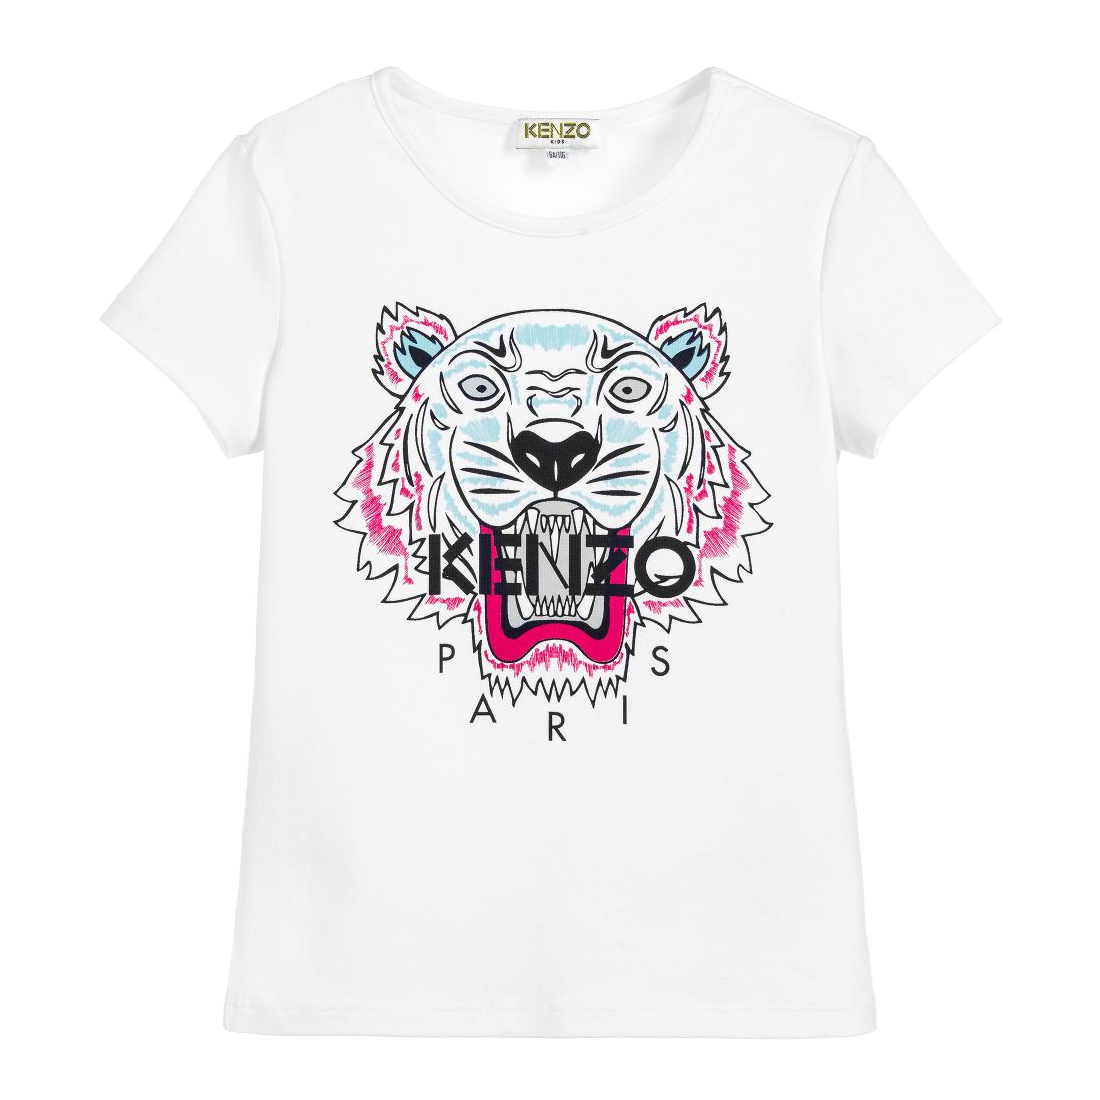 kenzo t shirt for girls